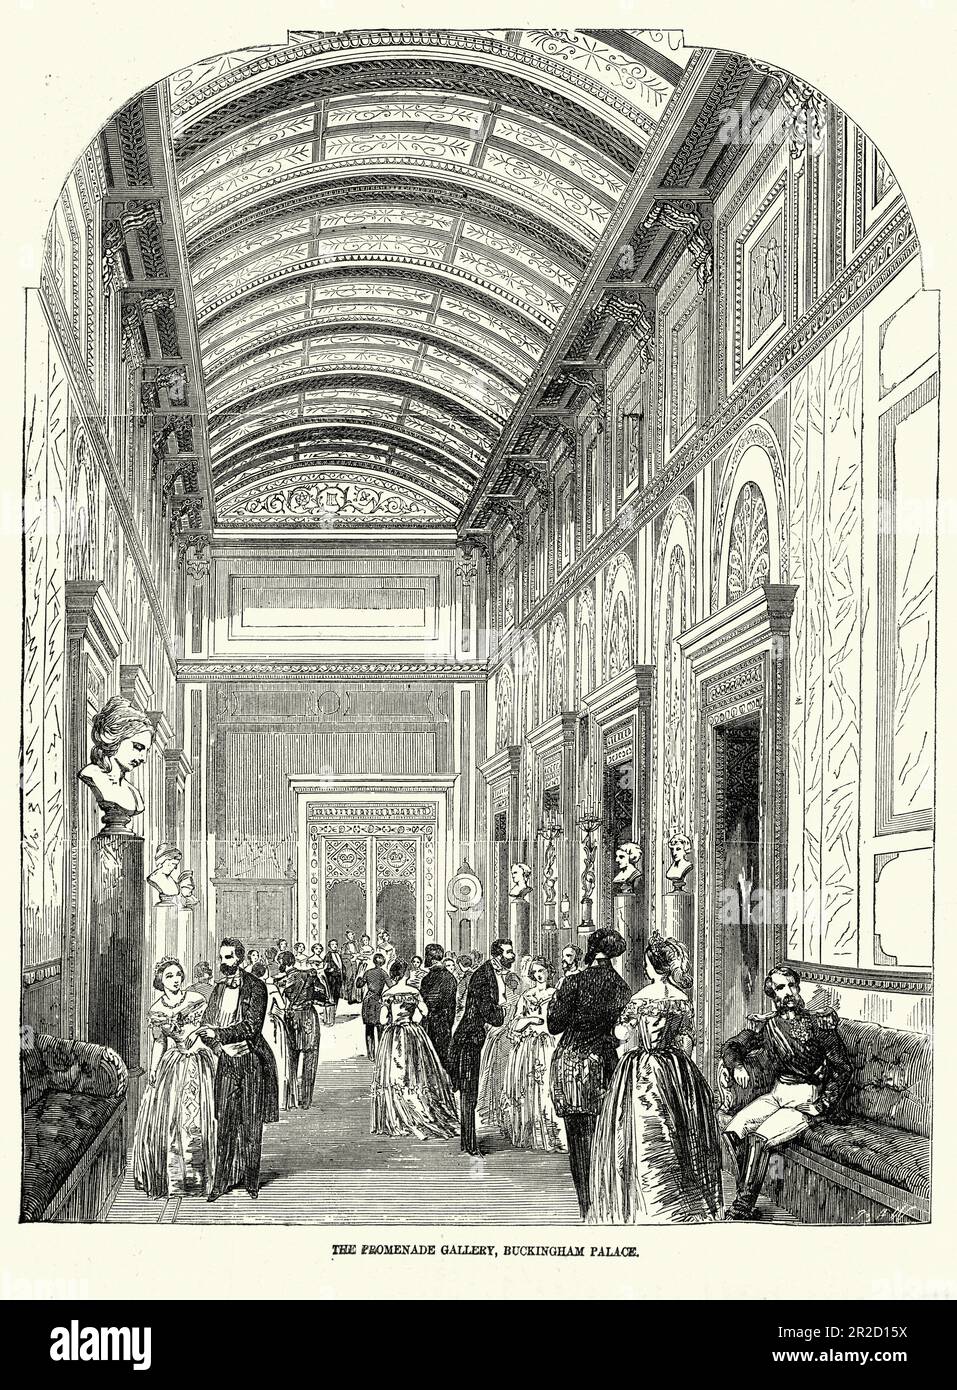 Alte Illustration der Promenade Gallery, Buckingham Palace, 1850er., 19. Jahrhundert Stockfoto